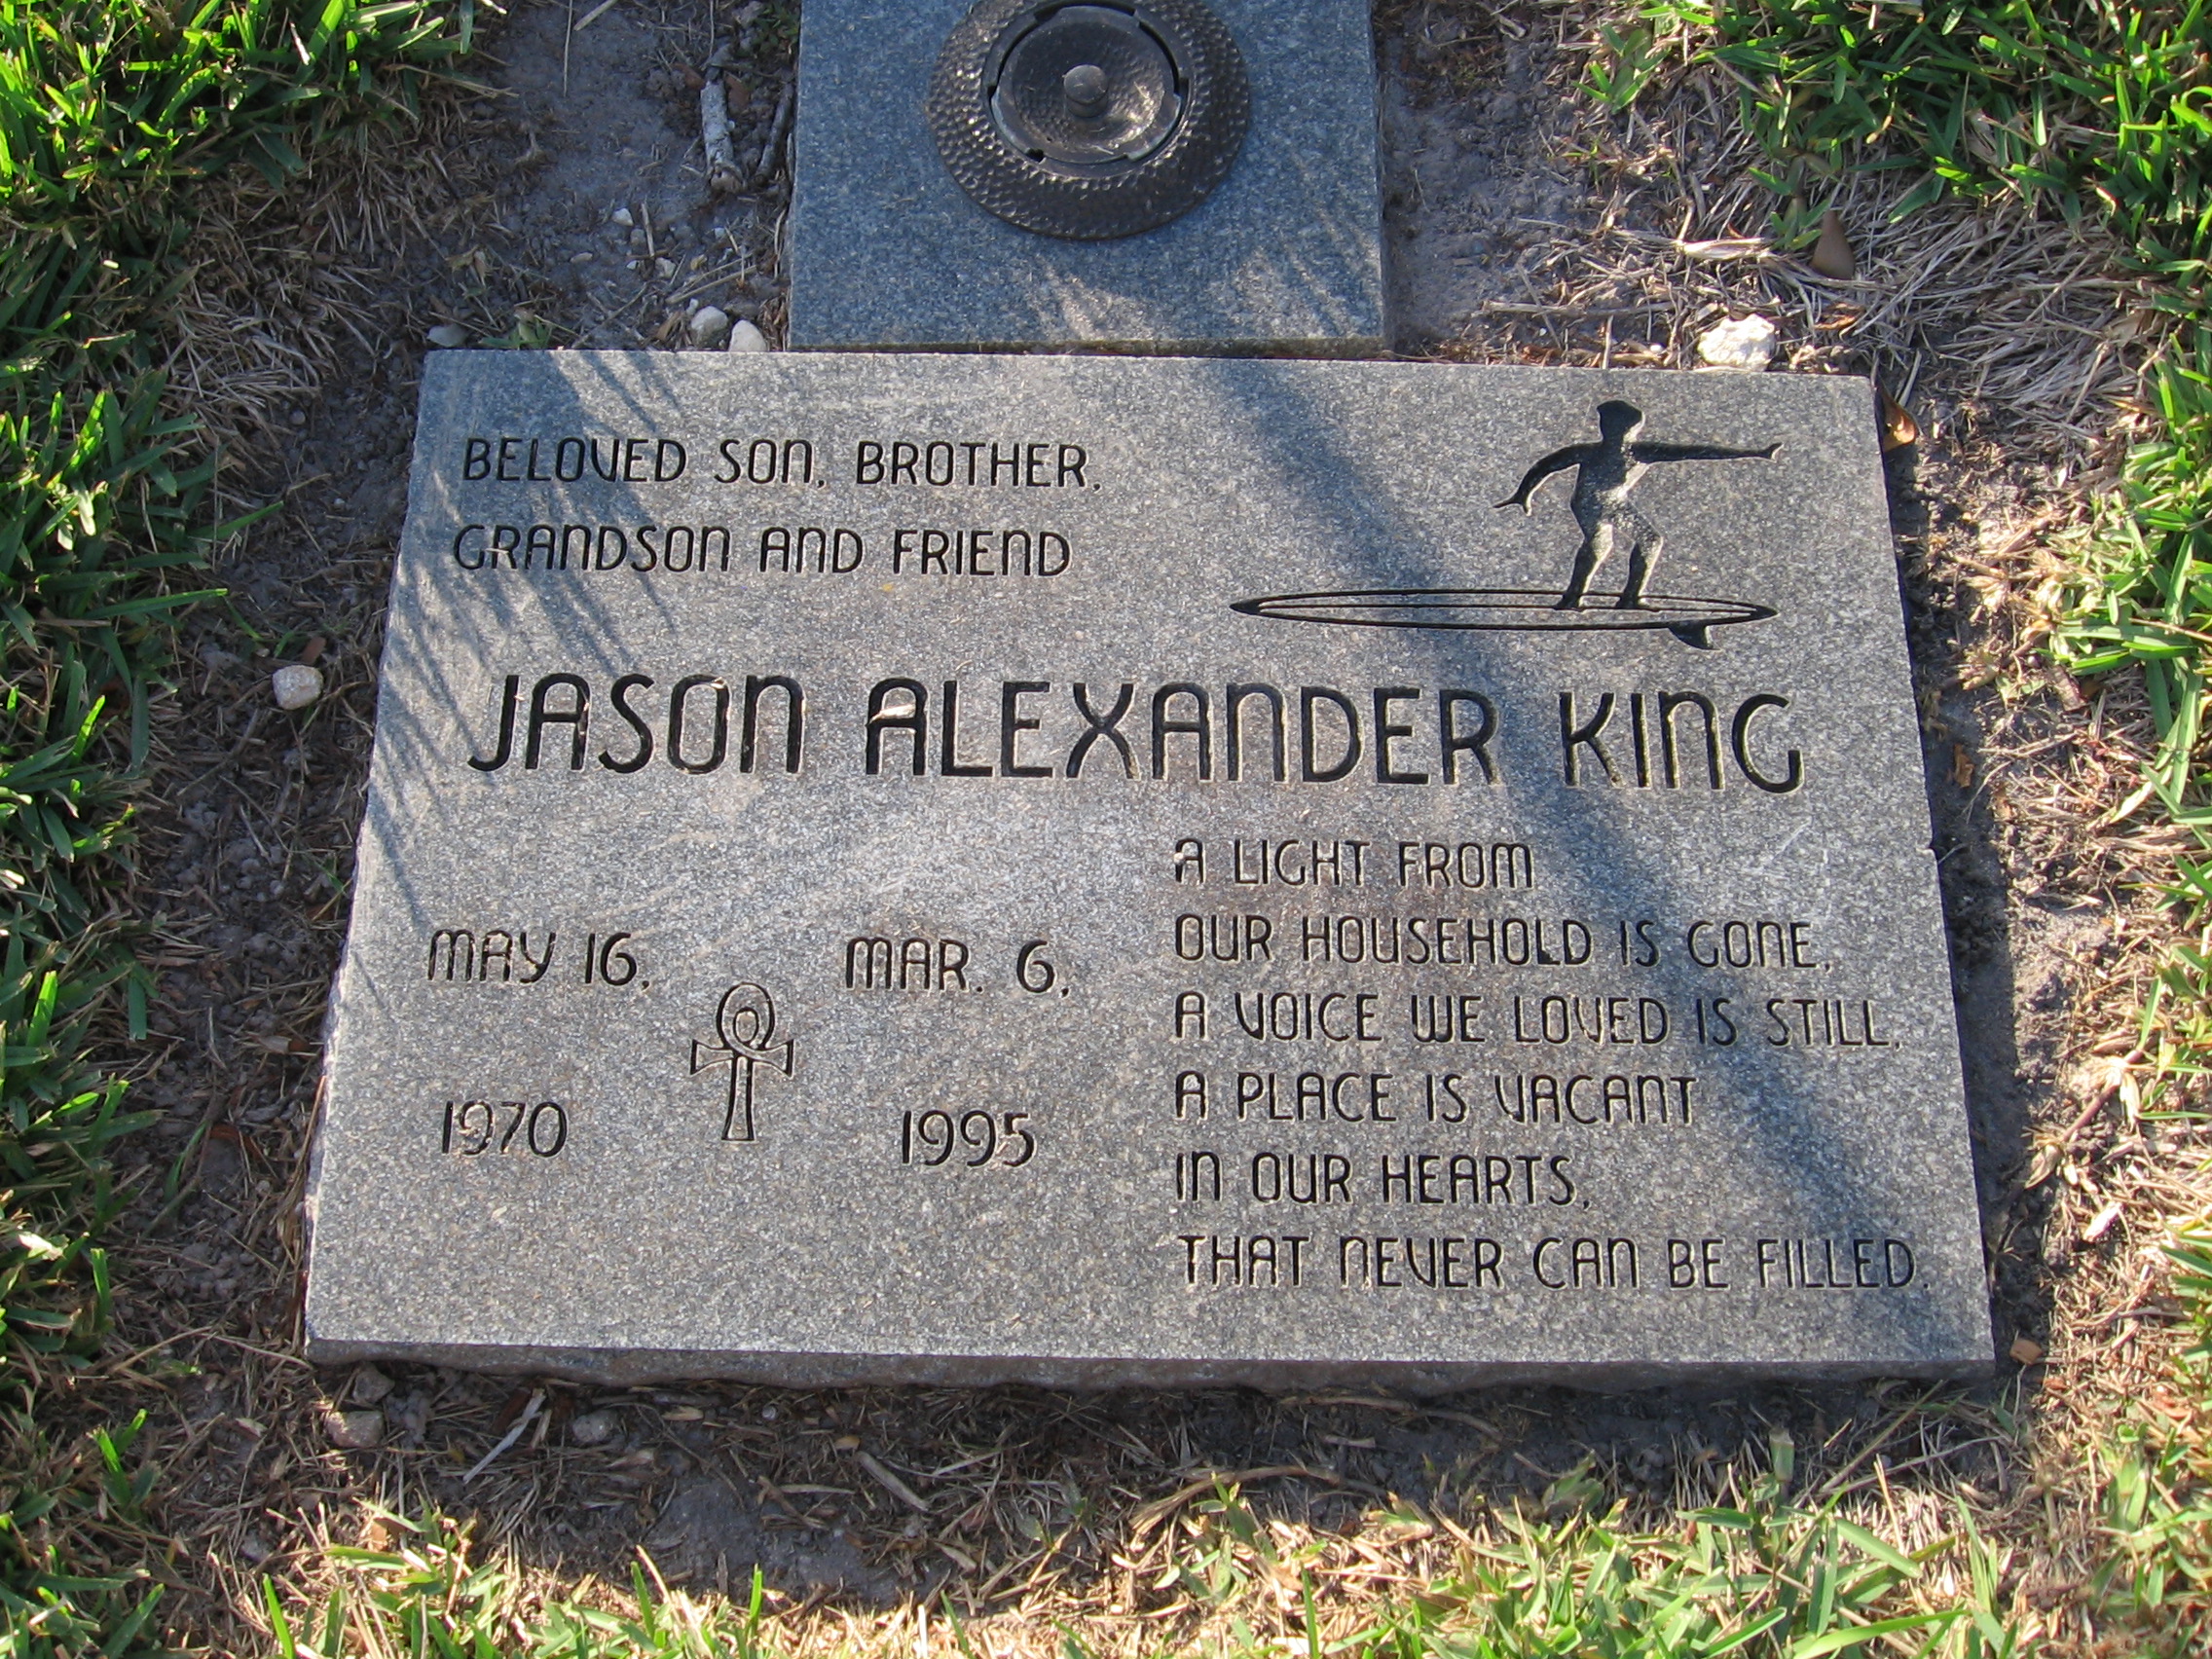 Jason Alexander King